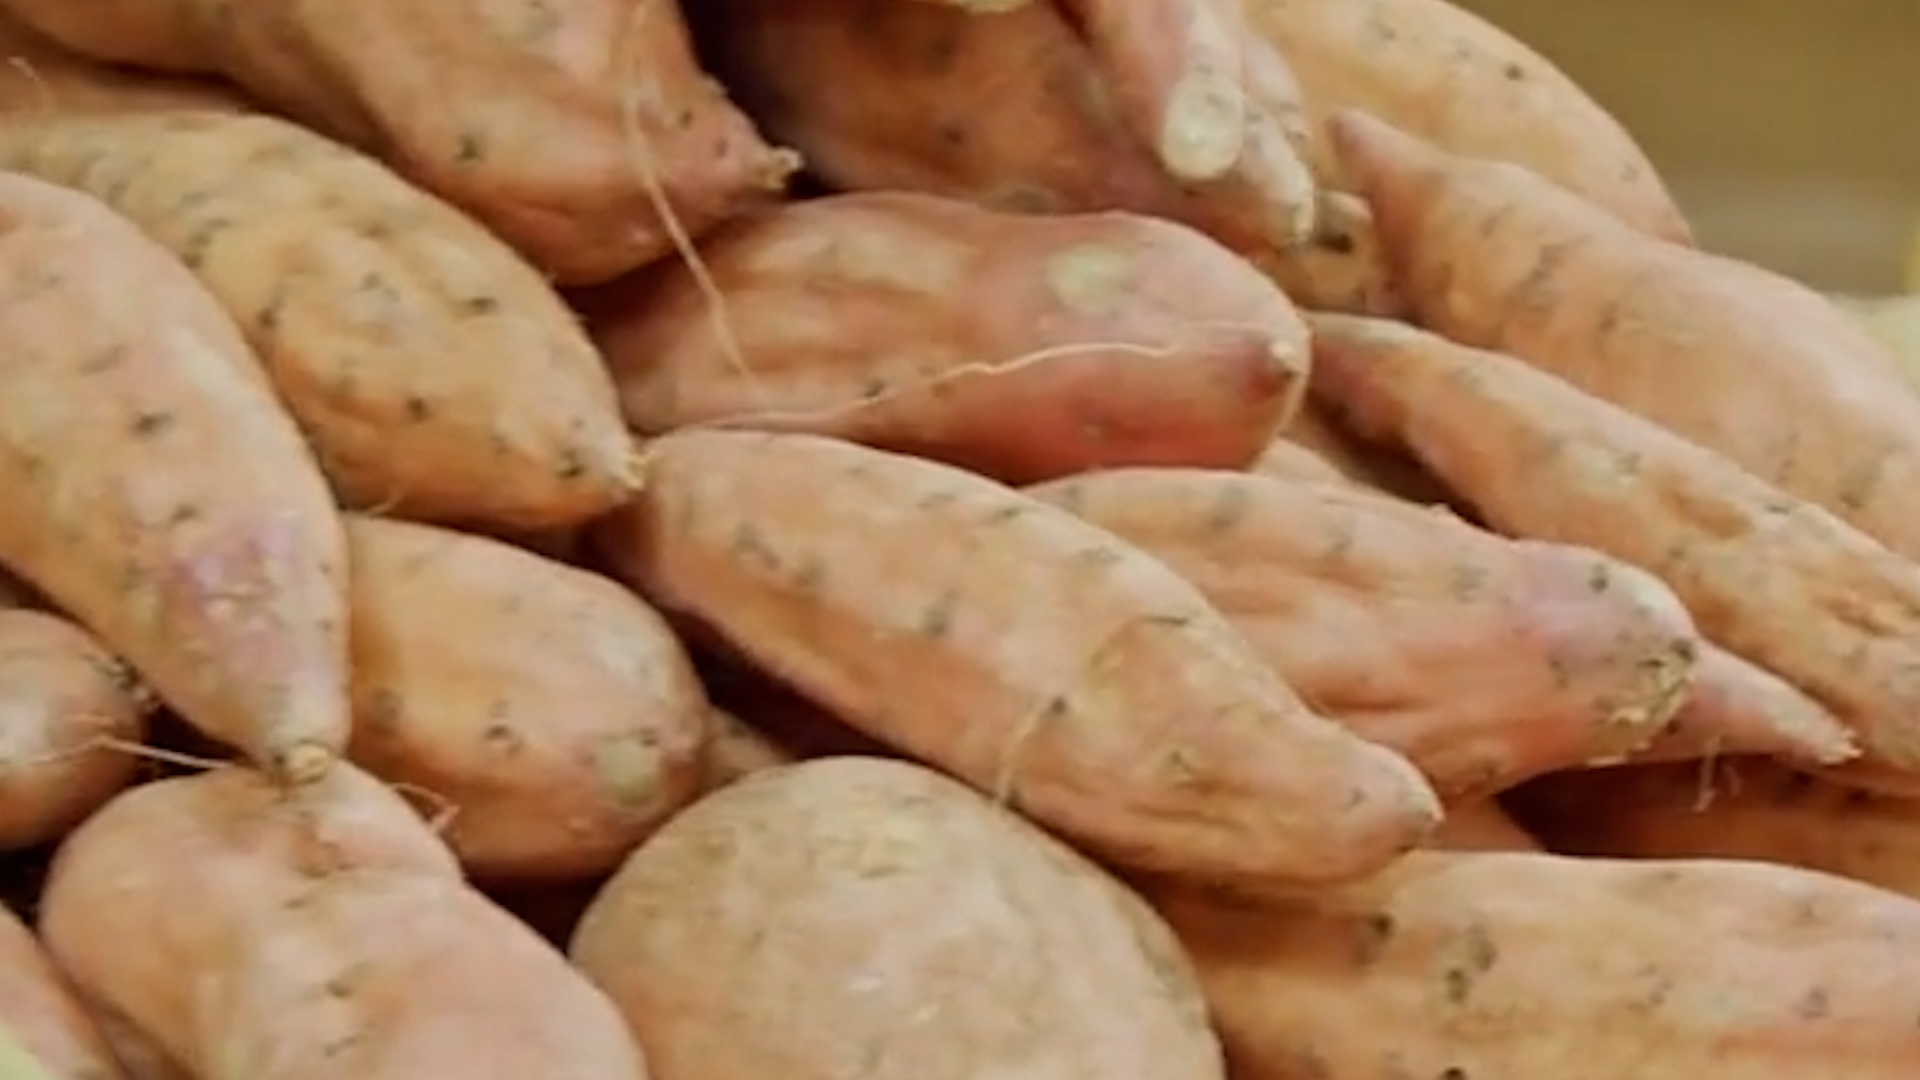 Sweet Potatoes or Yams?